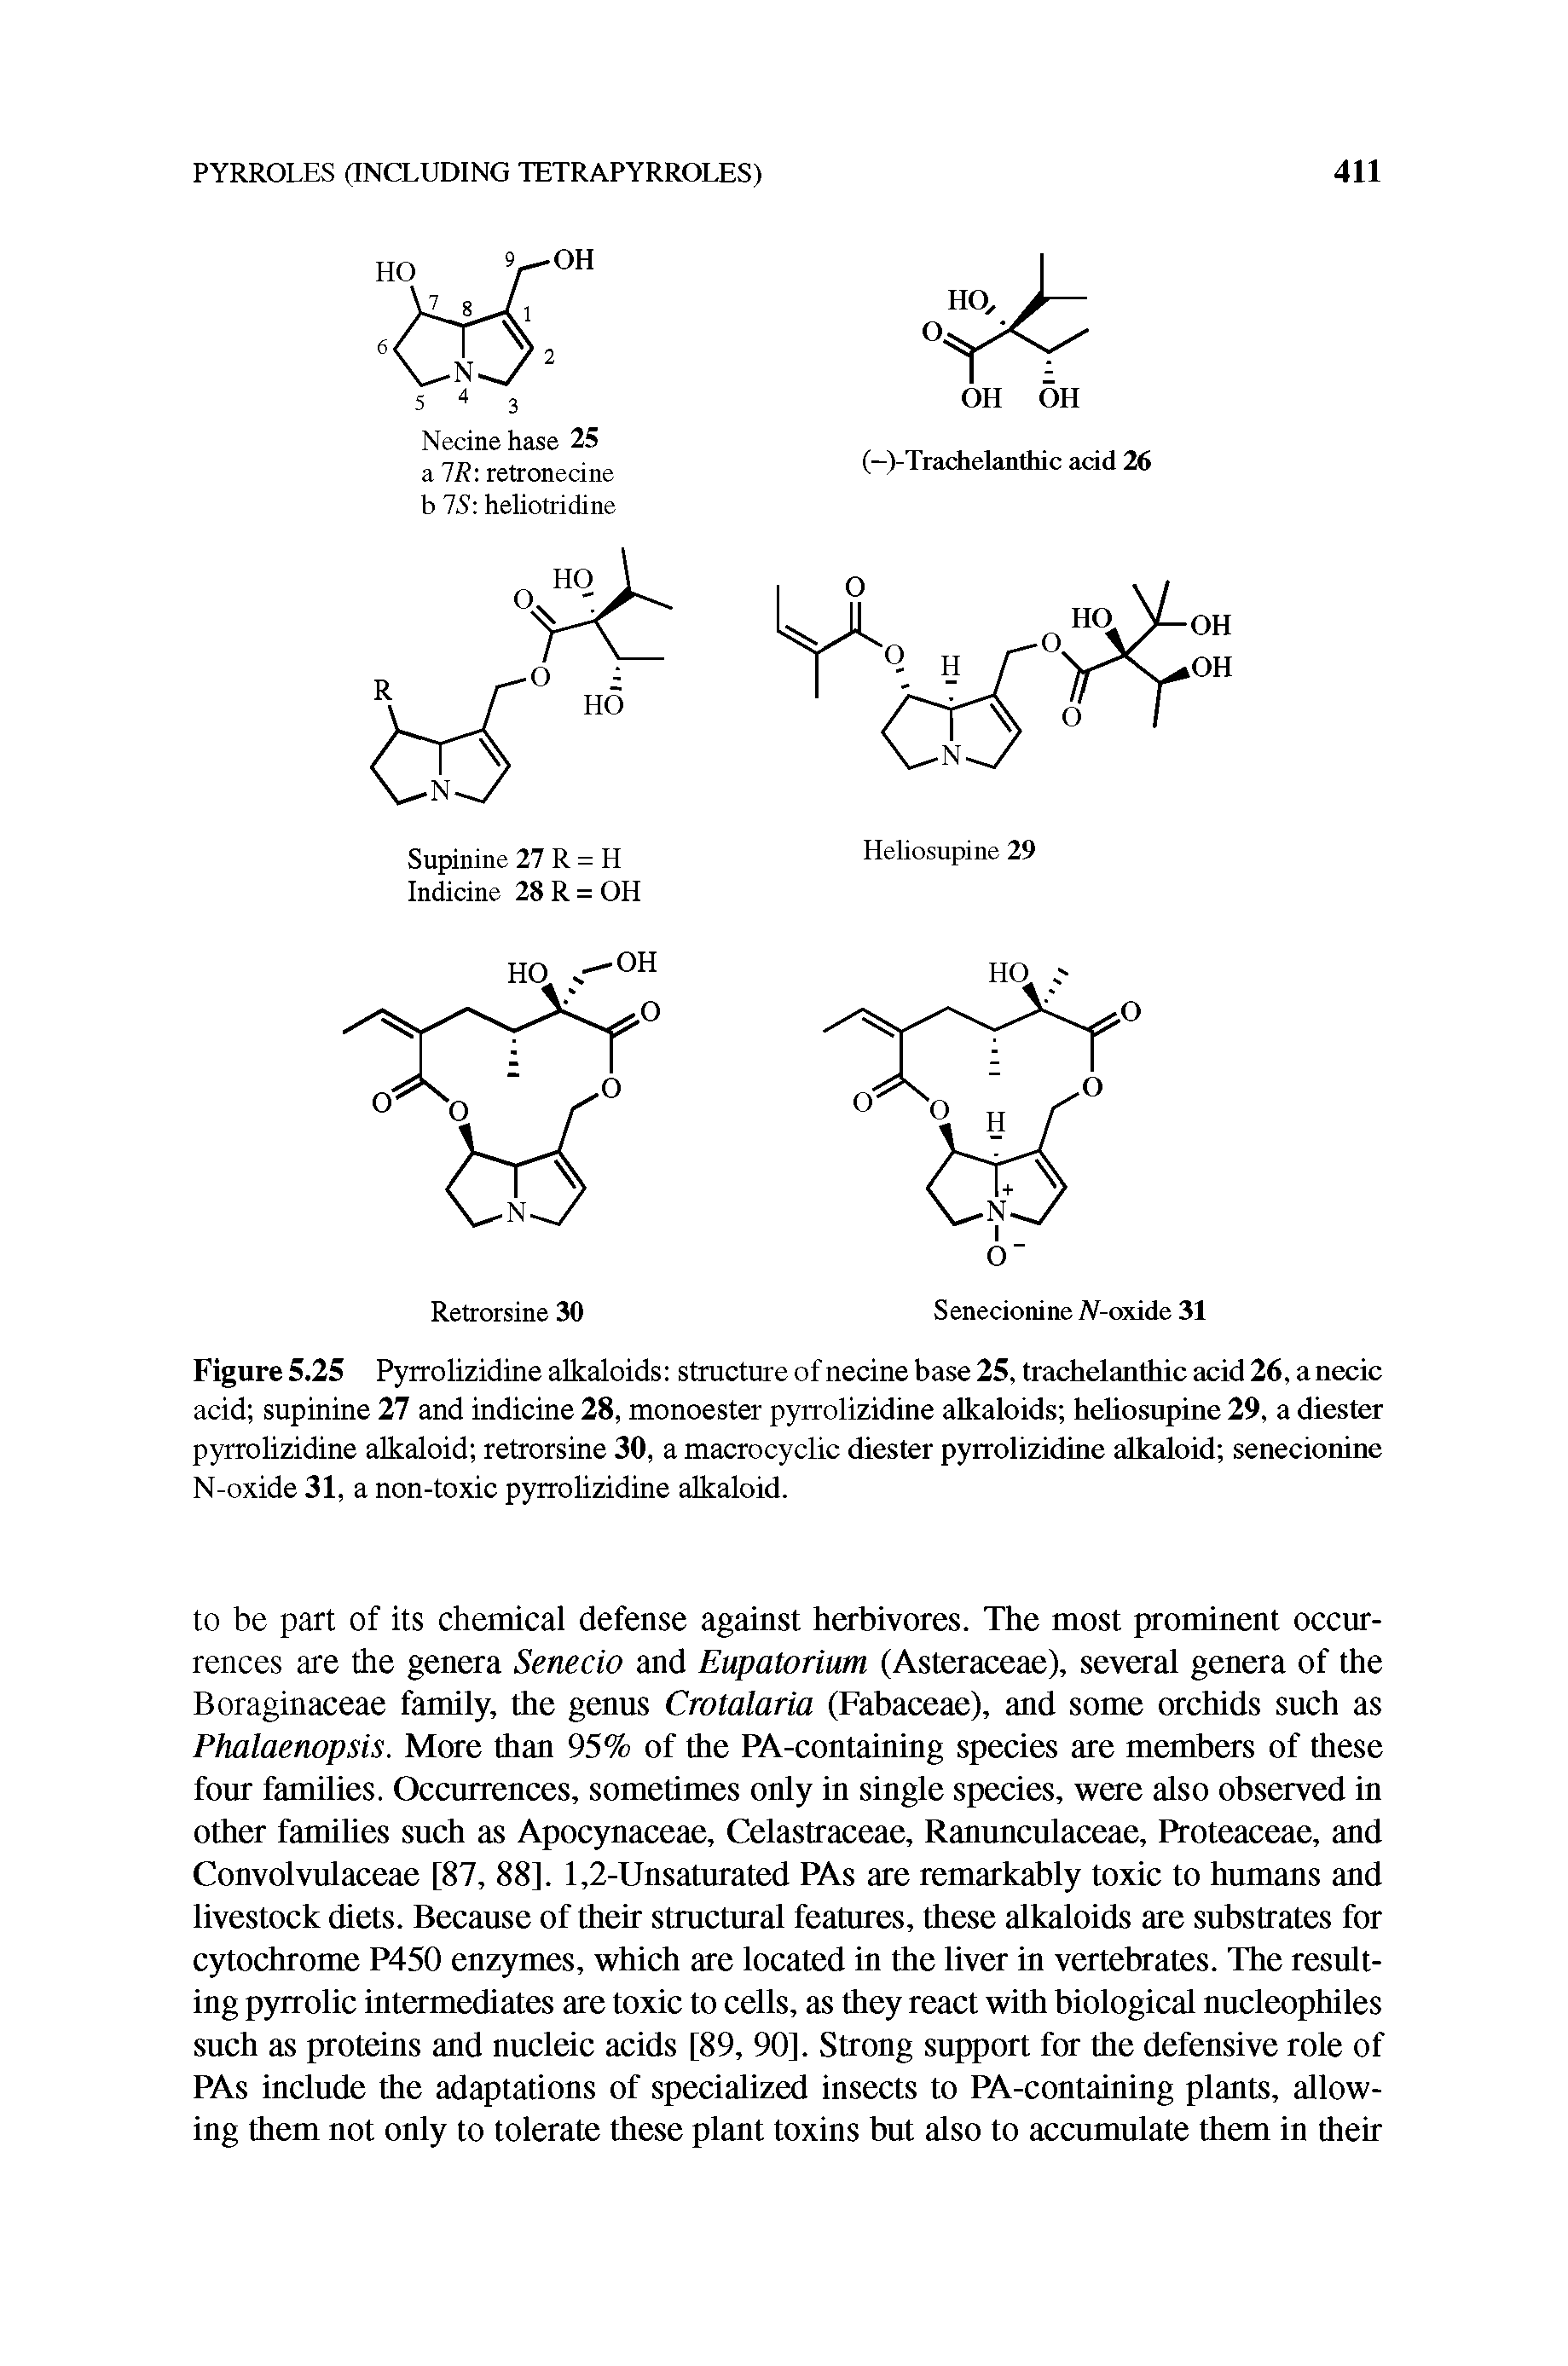 Figure 5.25 Pyrrolizidine alkaloids structure of necine base 25, trachelanthic acid 26, a necic acid supinine 27 and indicine 28, monoester pyrrolizidine alkaloids heliosupme 29, a diester pyrrolizidine alkaloid retrorsine 30, a macrocyclic diester pyrrolizidine alkaloid senecionine N-oxide 31, a non-toxic pyrrolizidine alkaloid.